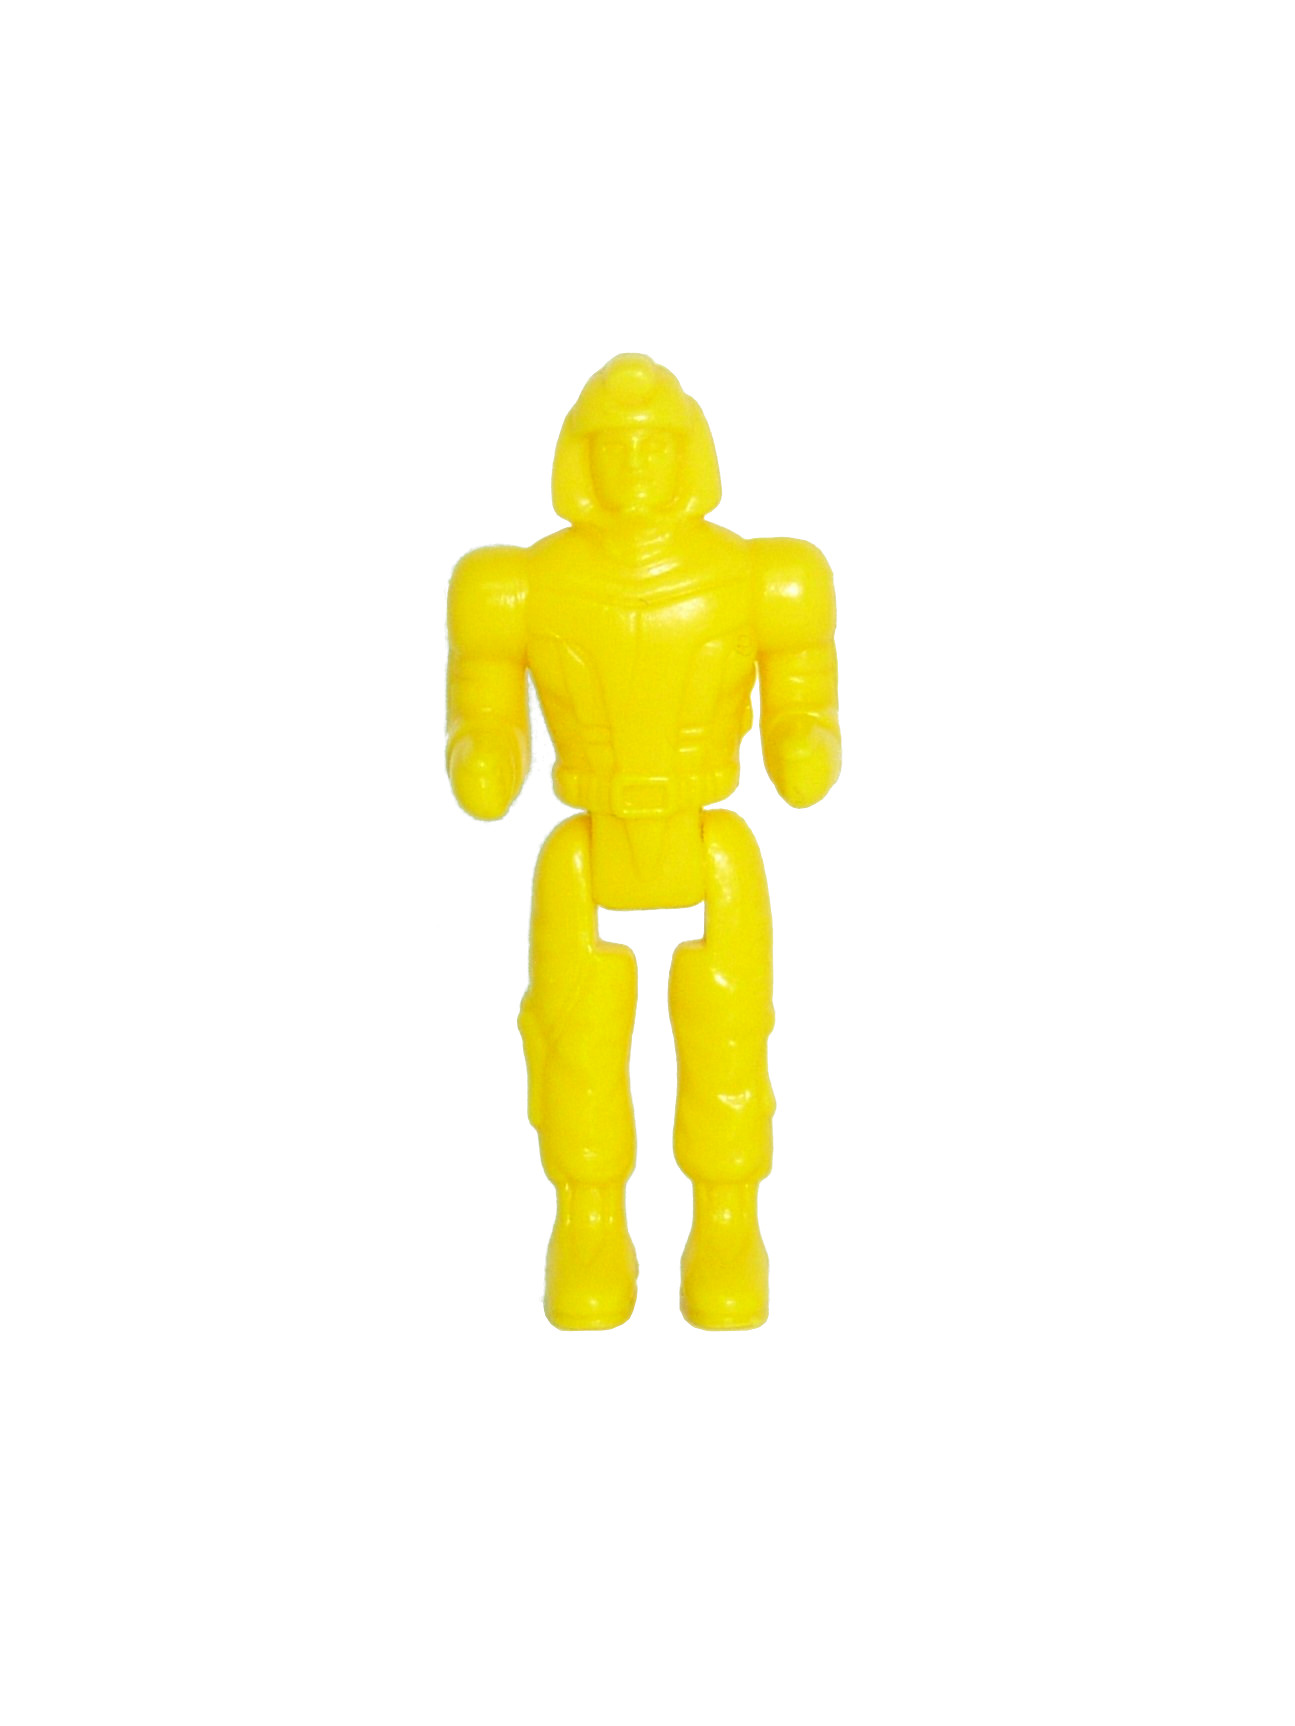 Yellow pilot figure